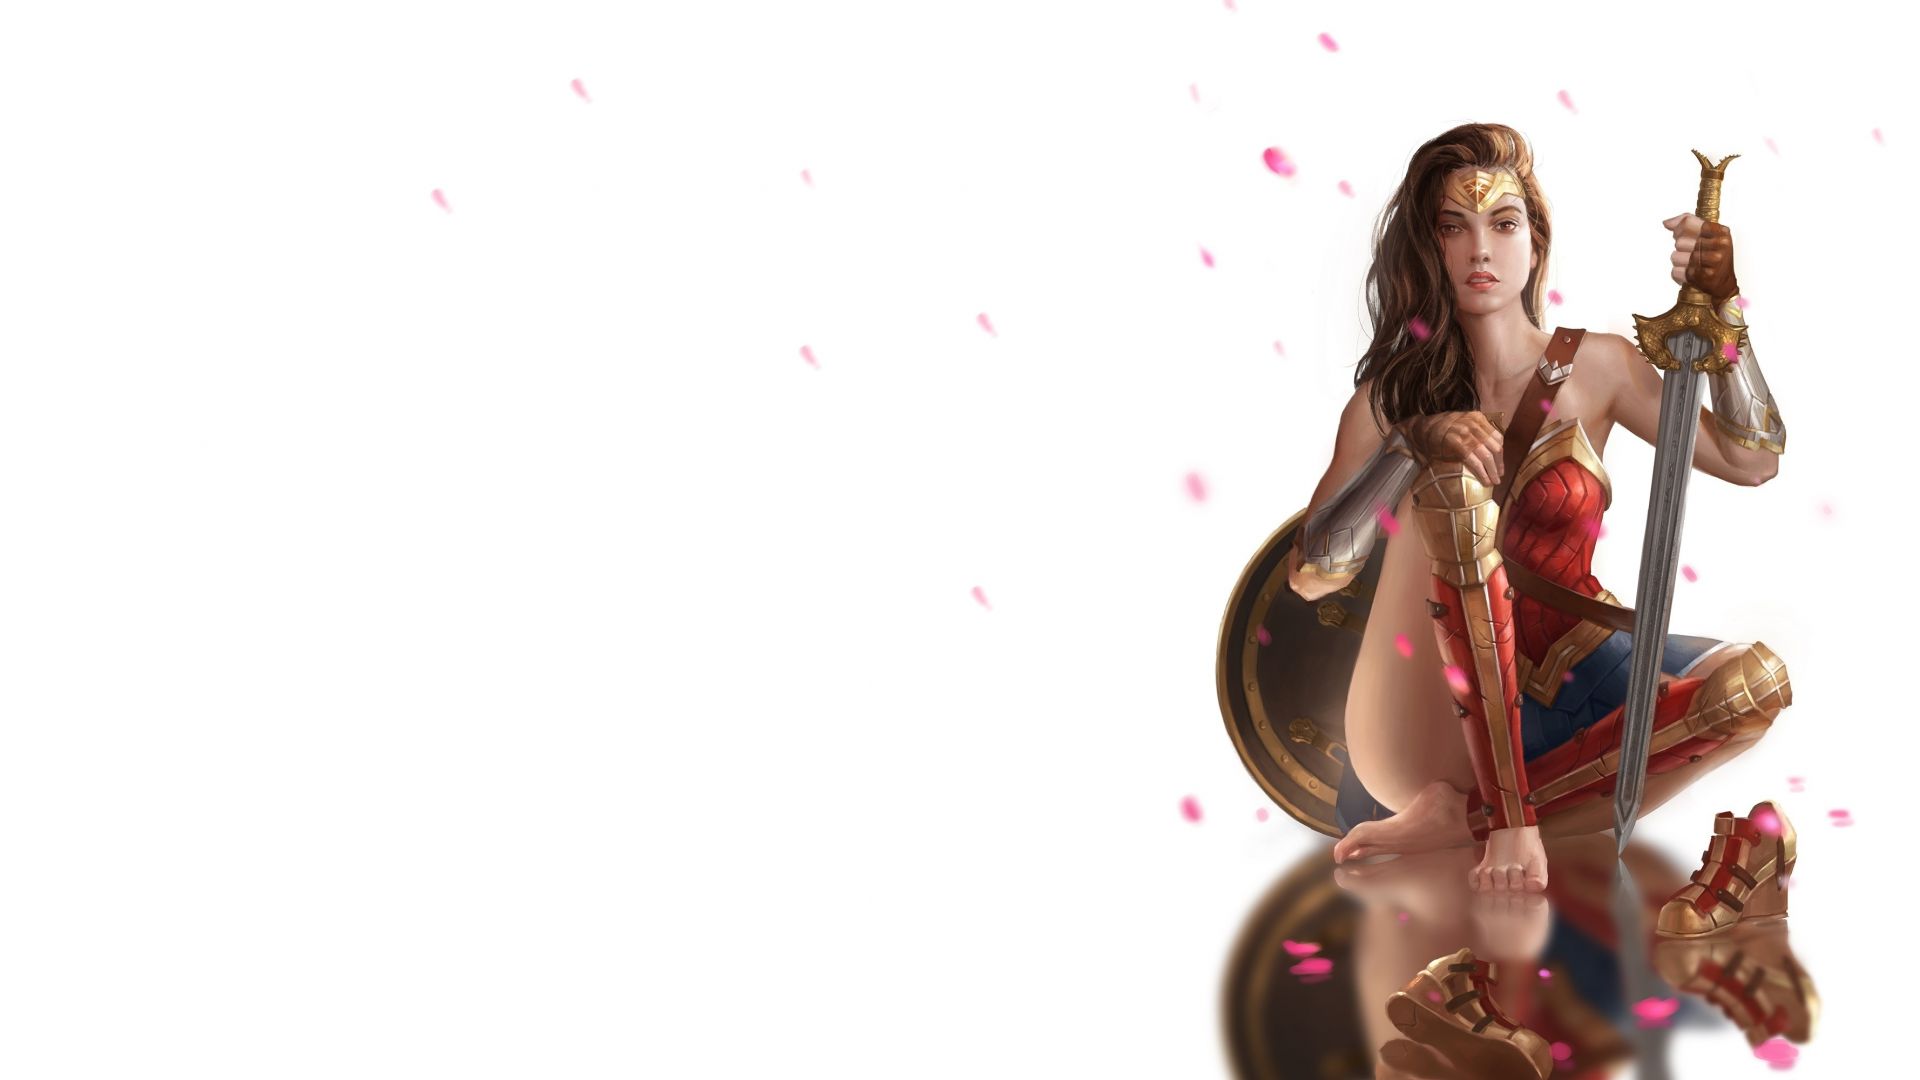 Wonder Woman Superhero Artwork Wallpapers